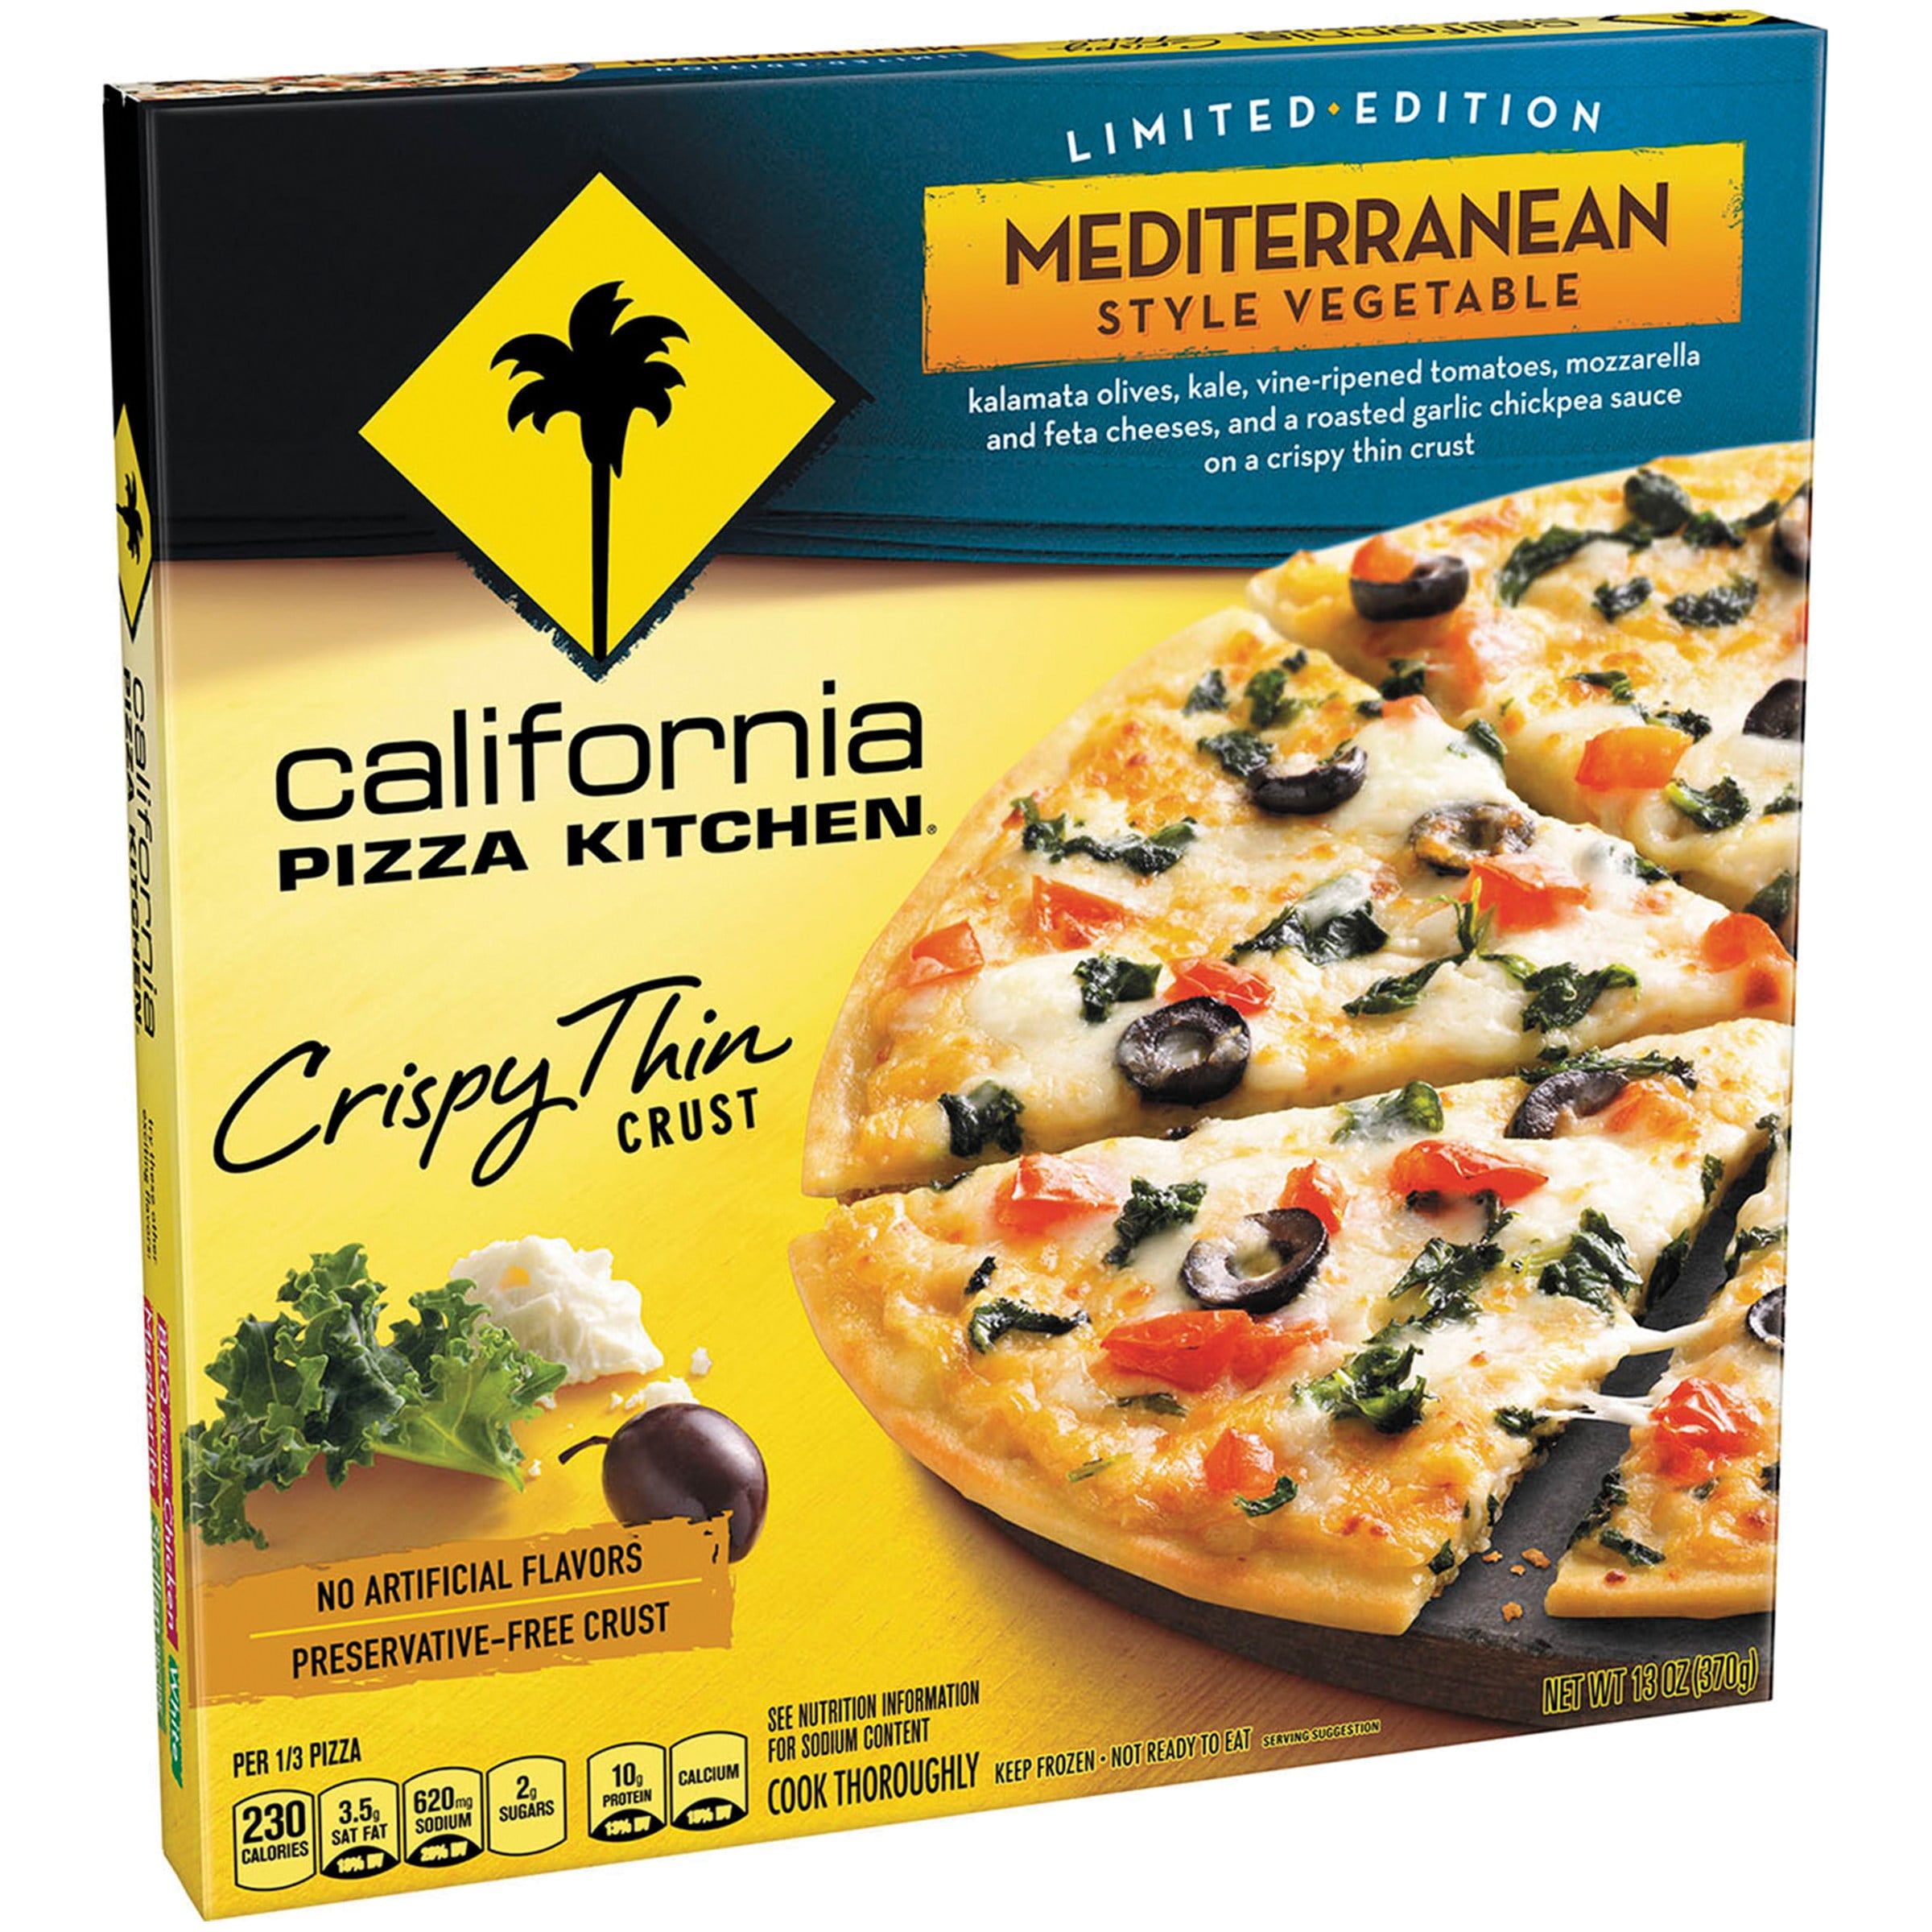 CALIFORNIA PIZZA KITCHEN Limited Edition Crispy Thin Crust